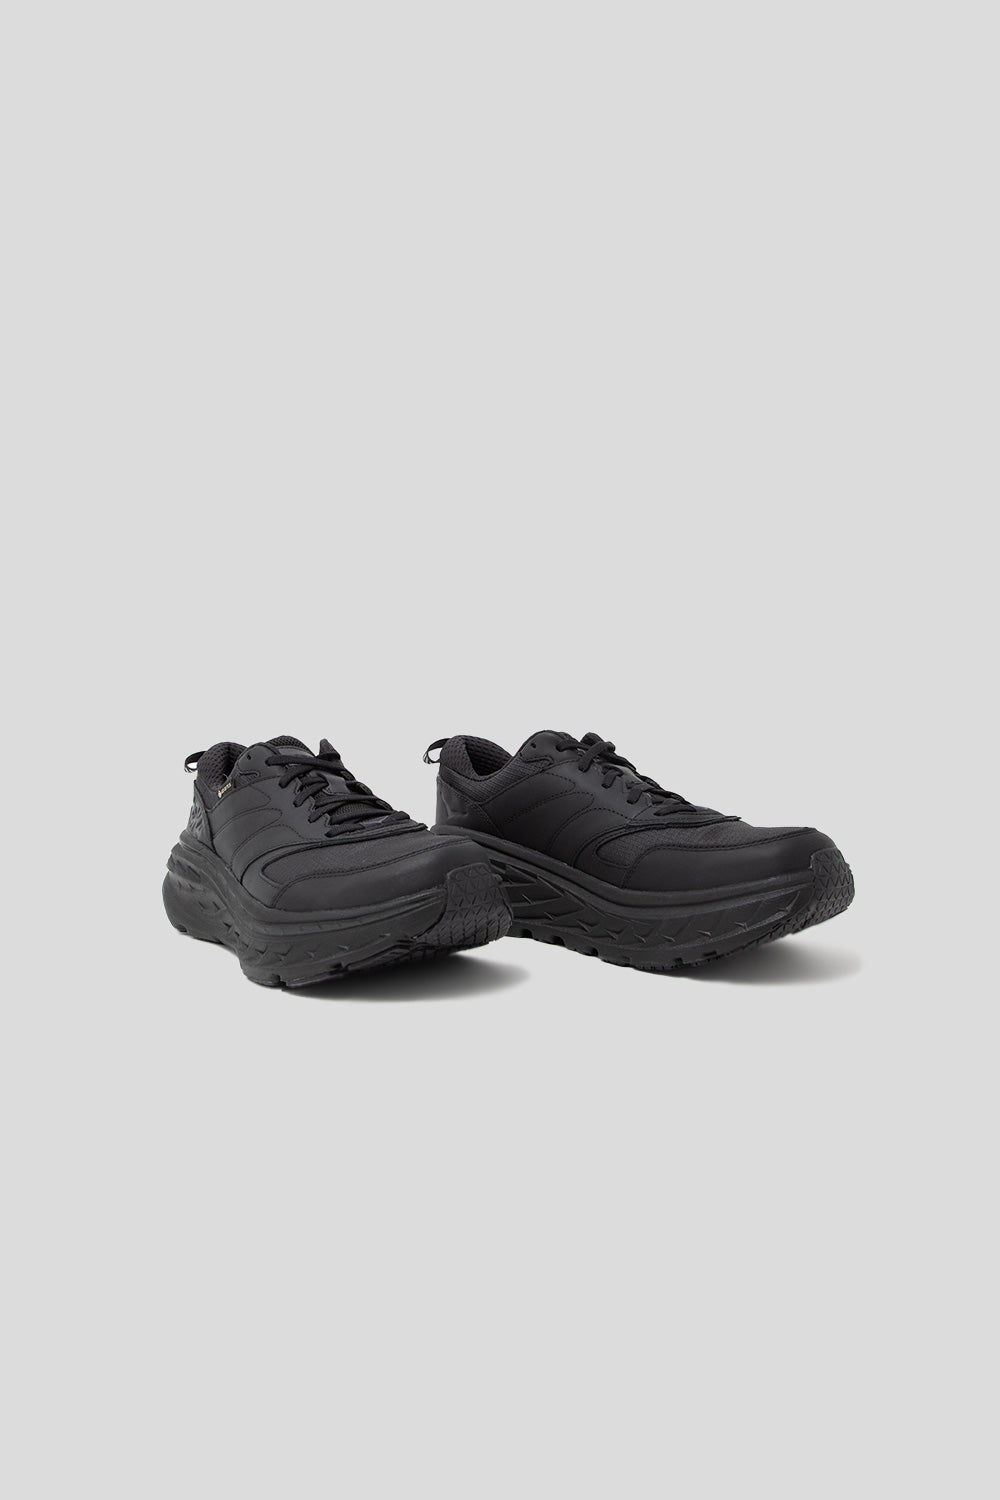 Hoka Bondi L GTX Shoe in Black / Black | Wallace Mercantile Shop